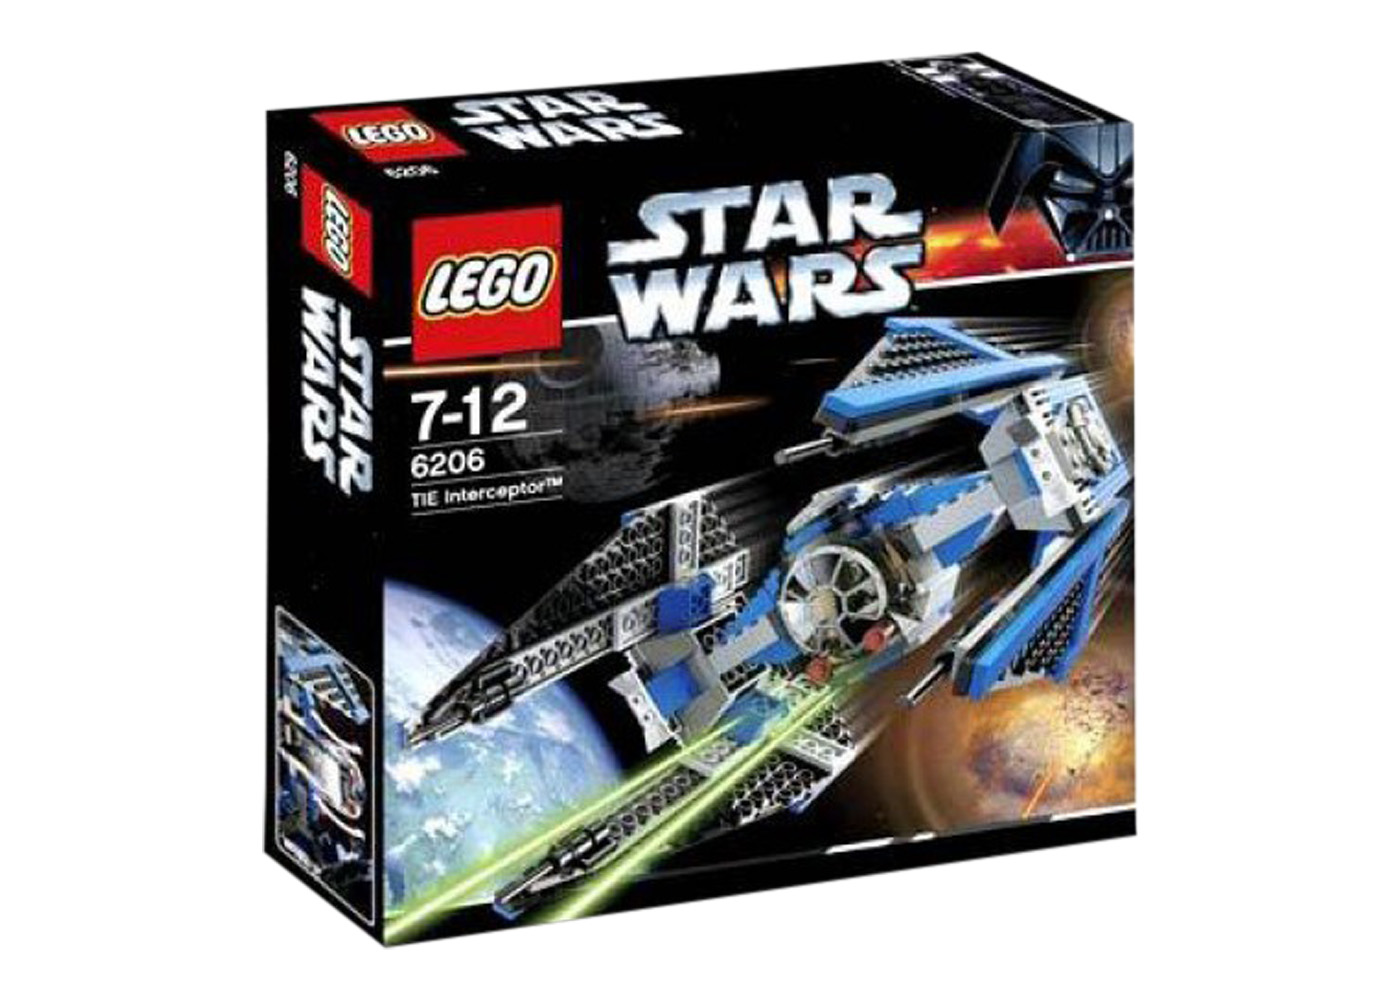 LEGO Star Wars Return of the Jedi TIE Interceptor Set 6206 - GB